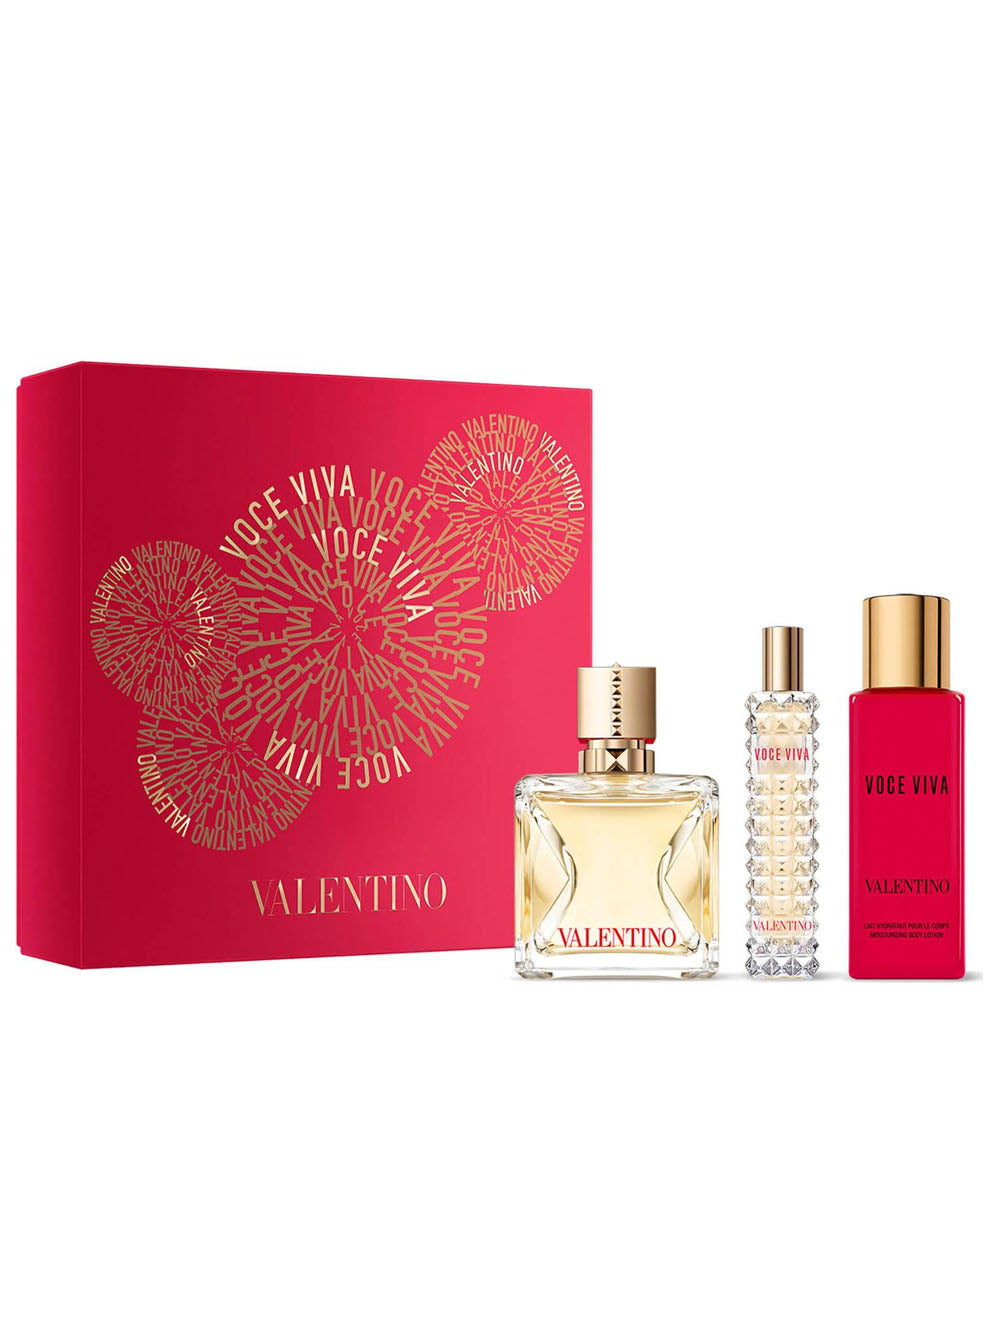 VALENTINO Voce Viva Eau de Parfum Gift Set - 100ml - MAISONDEFASHION.COM